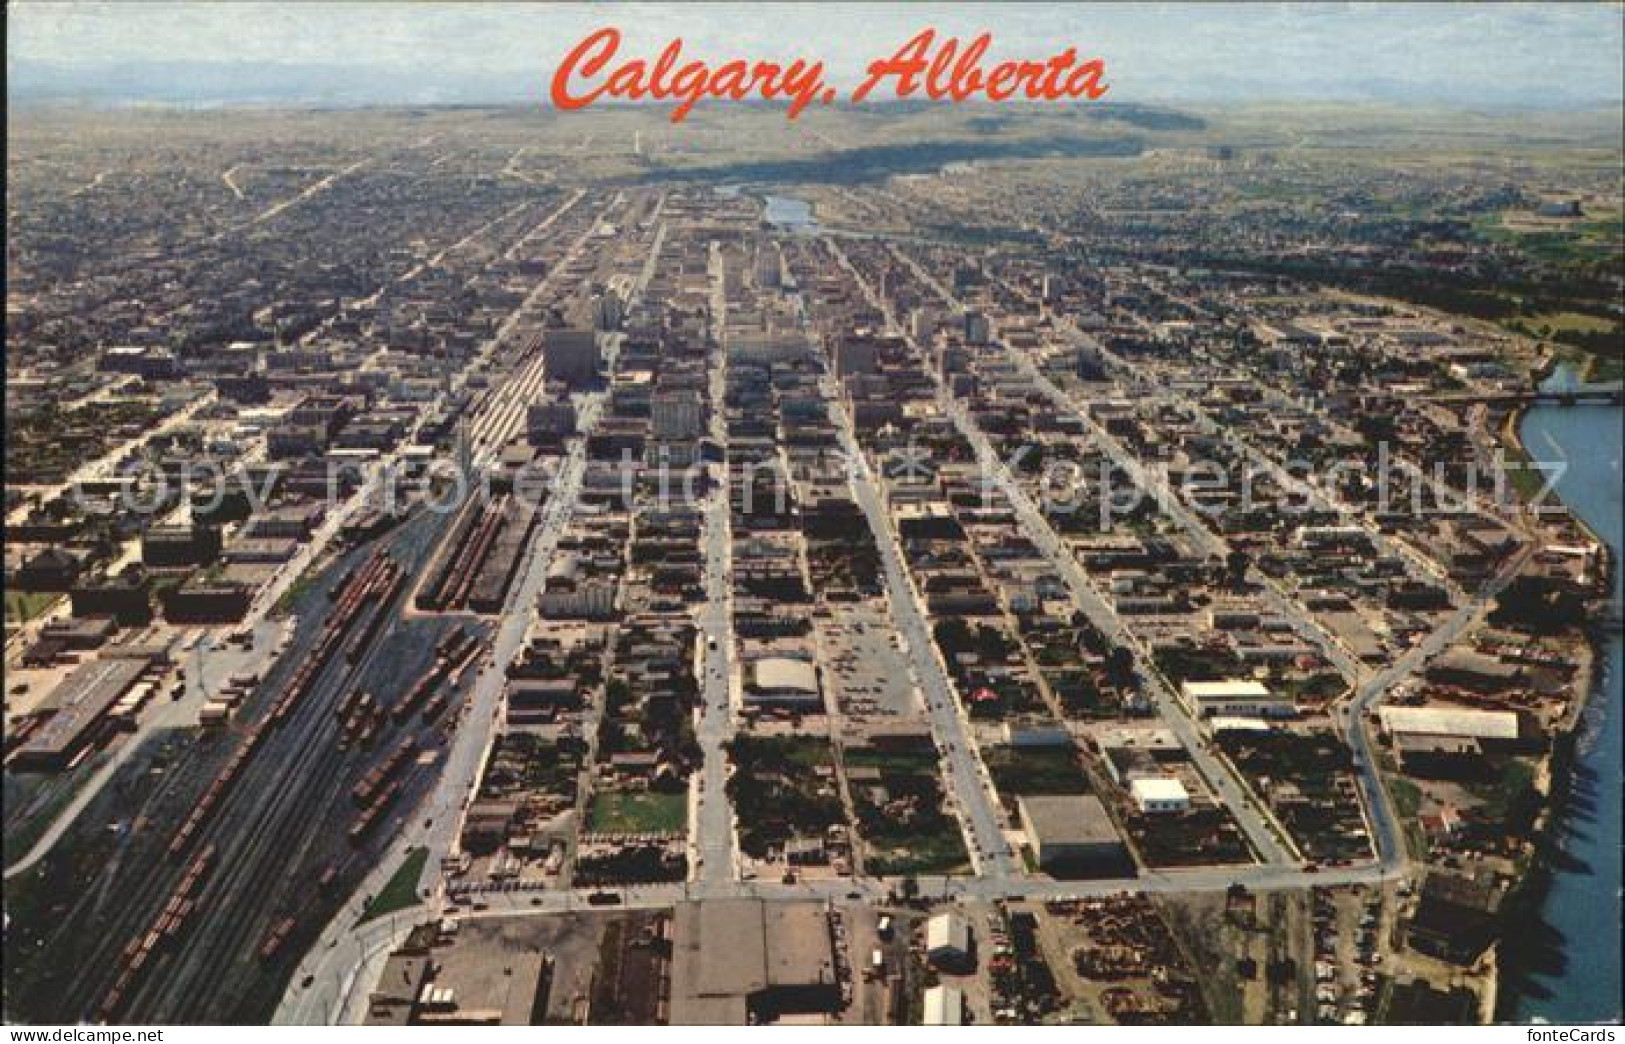 12020909 Calgary Aerial View Calgary - Ohne Zuordnung